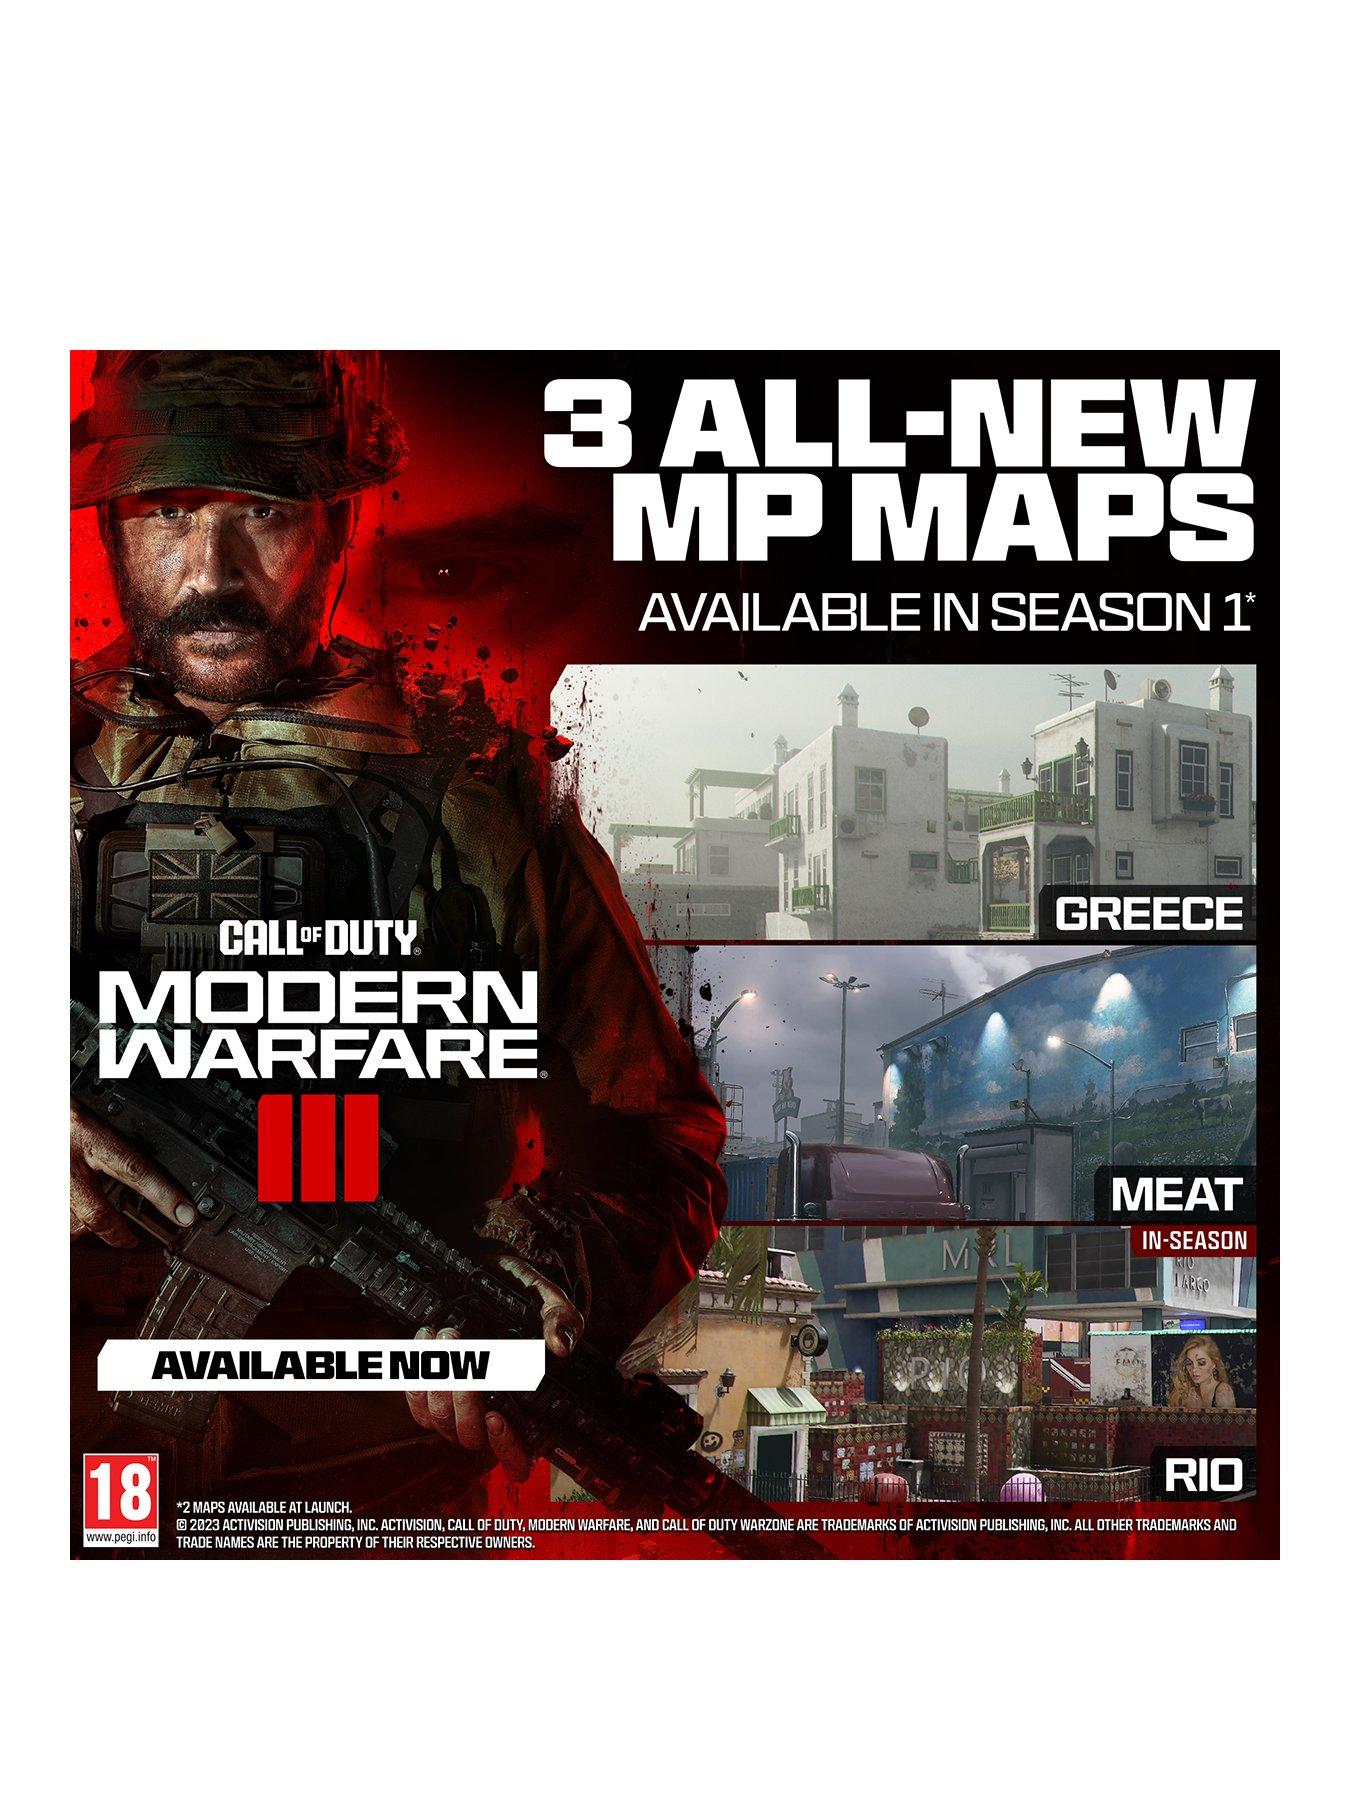 Call Of Duty Advanced Warfare - Gold Edition - PlayStation 3